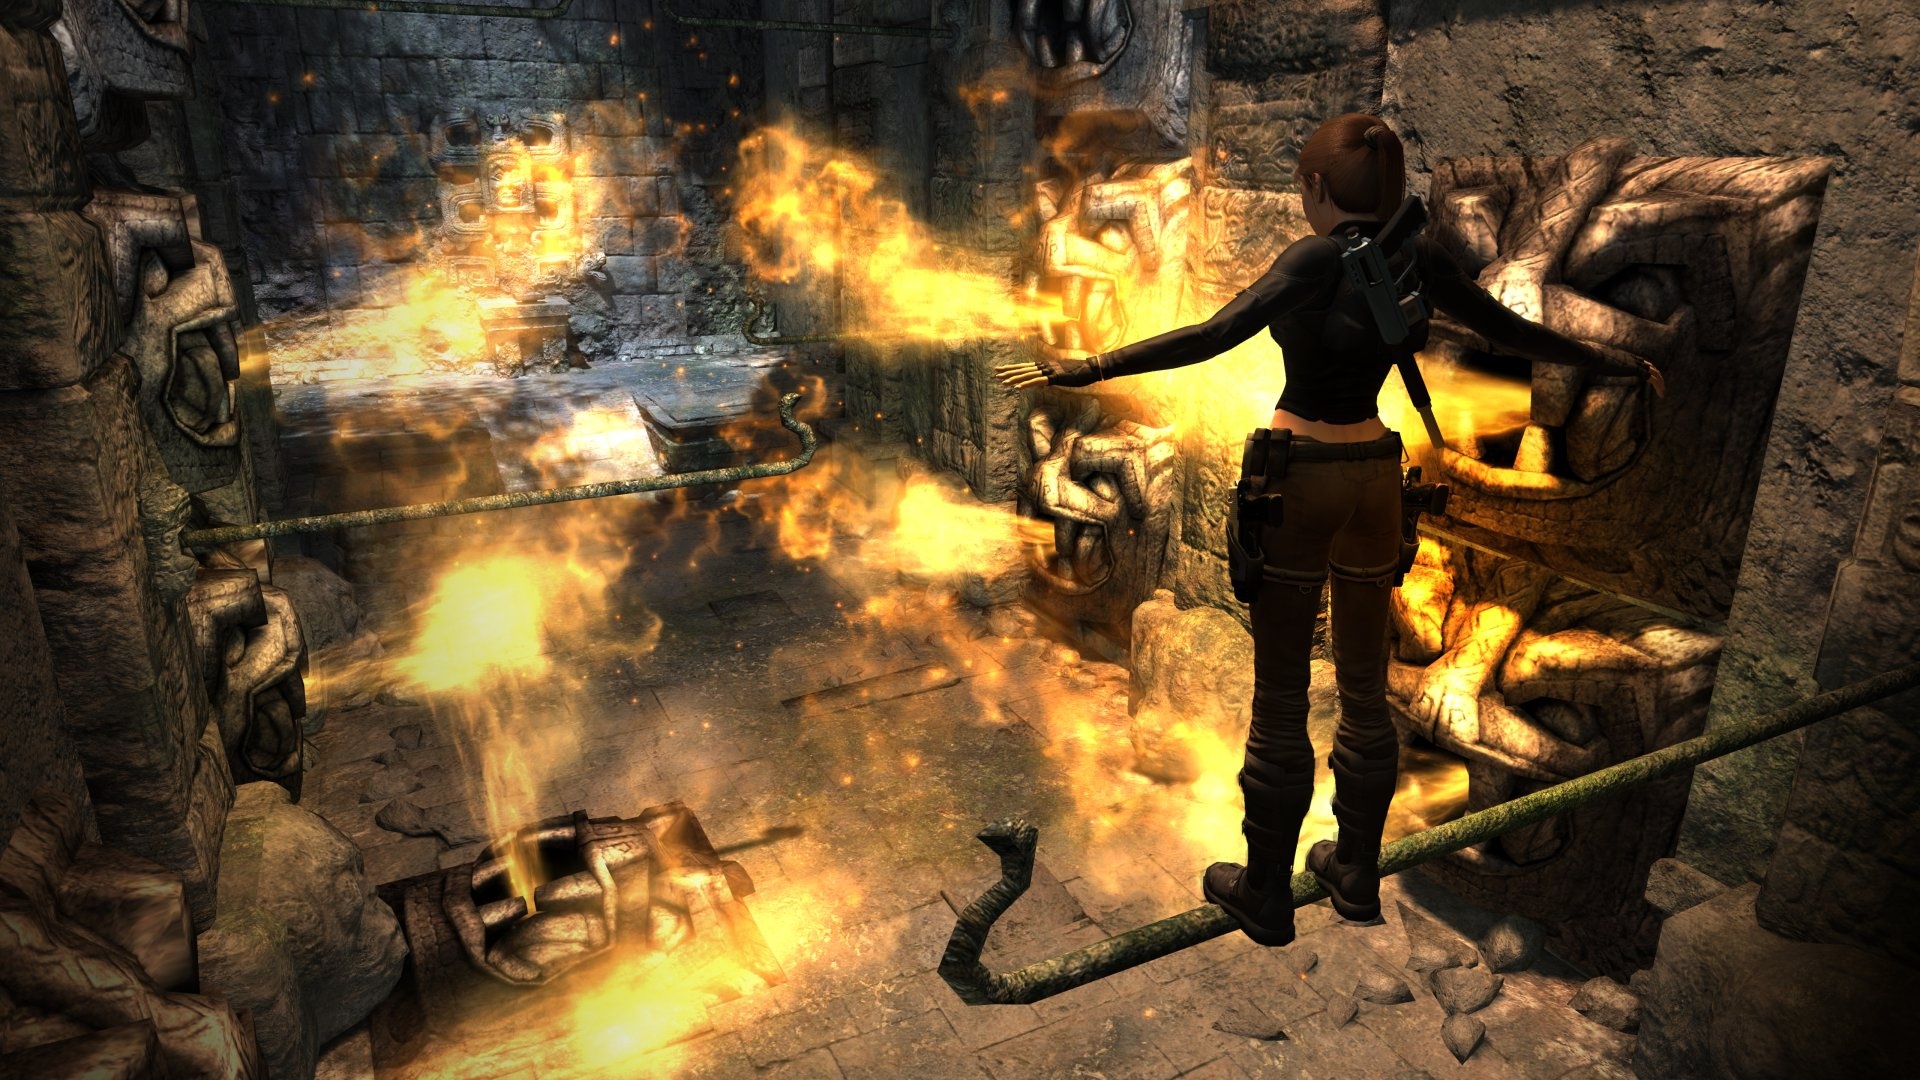 Lara Croft in Underworld, Free wallpaper download, HD resolution, Immersive visuals, 1920x1080 Full HD Desktop